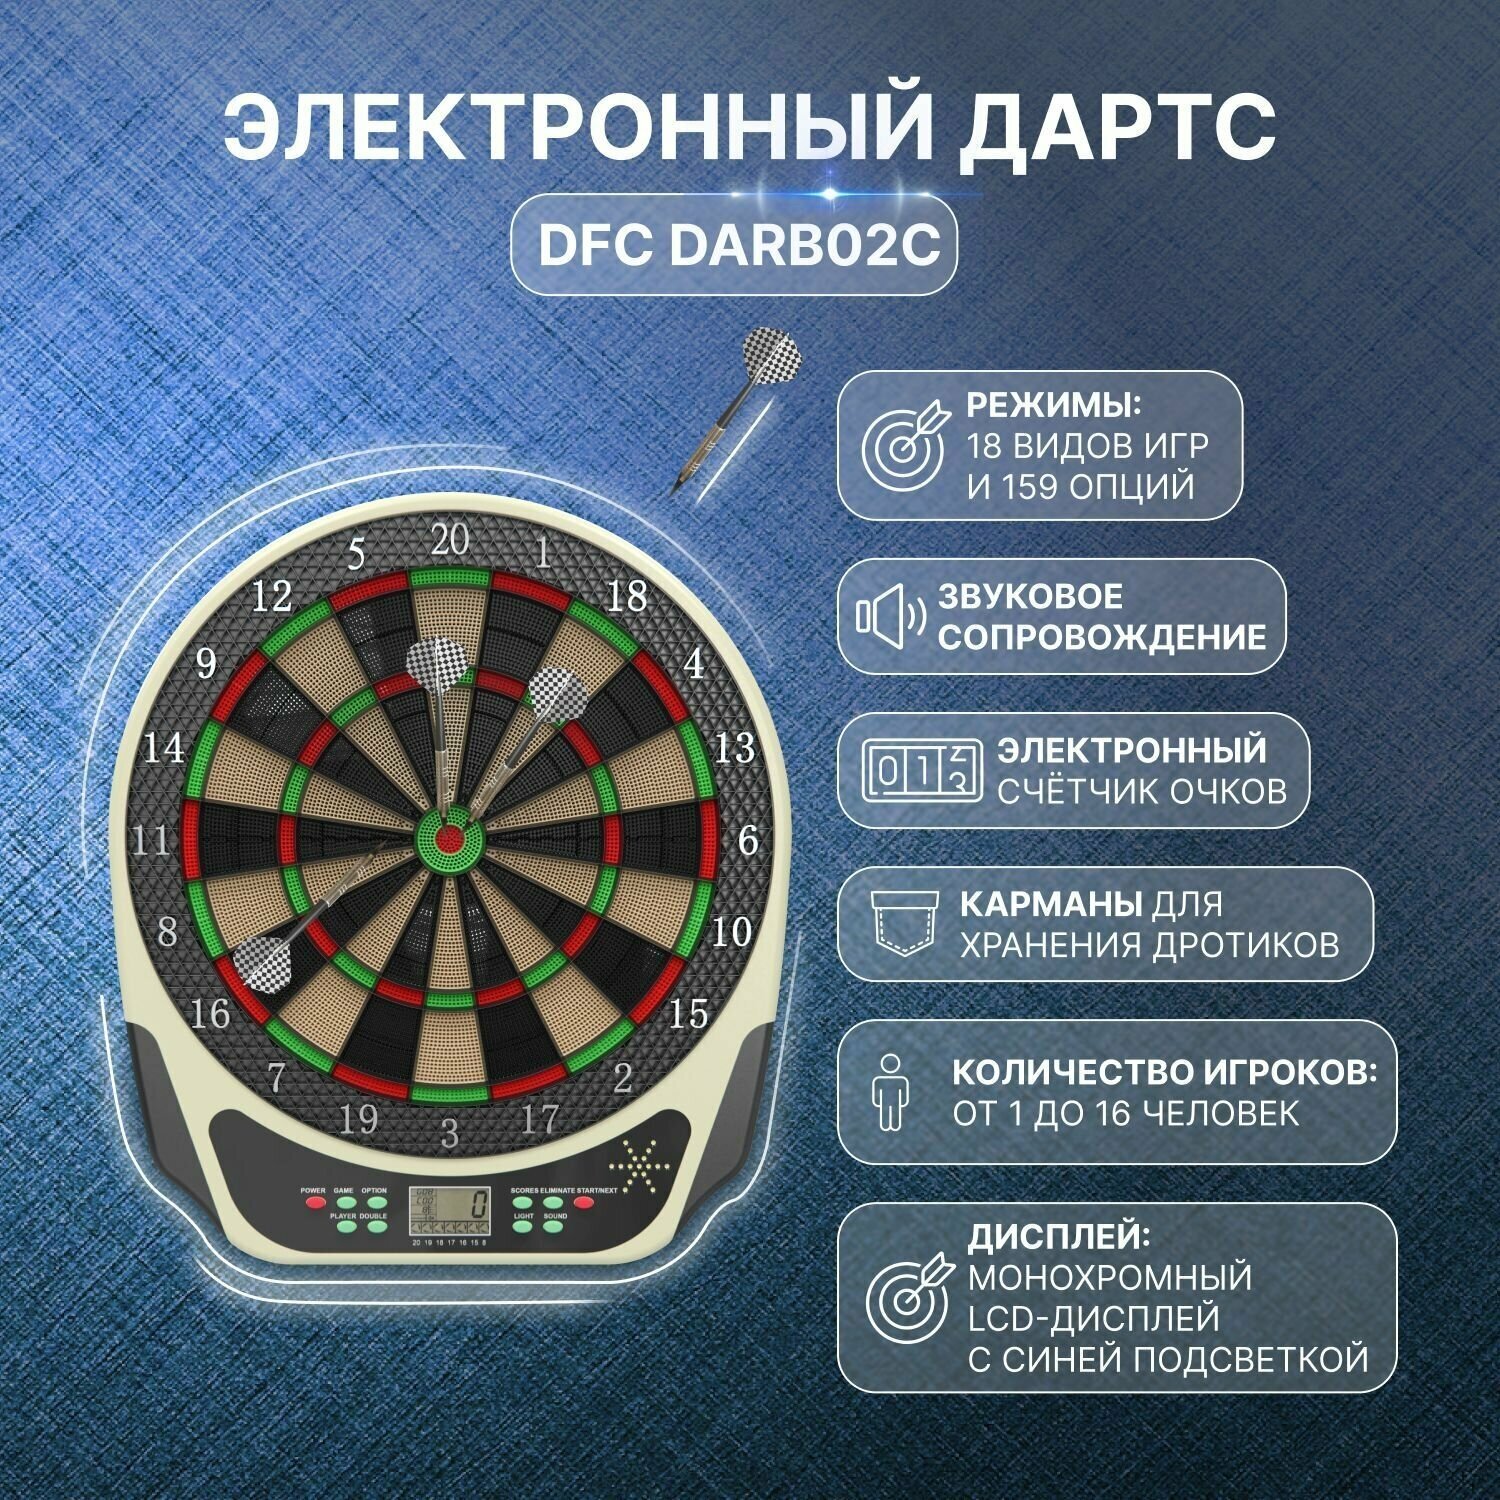 Электронный дартс DFC DARB02C